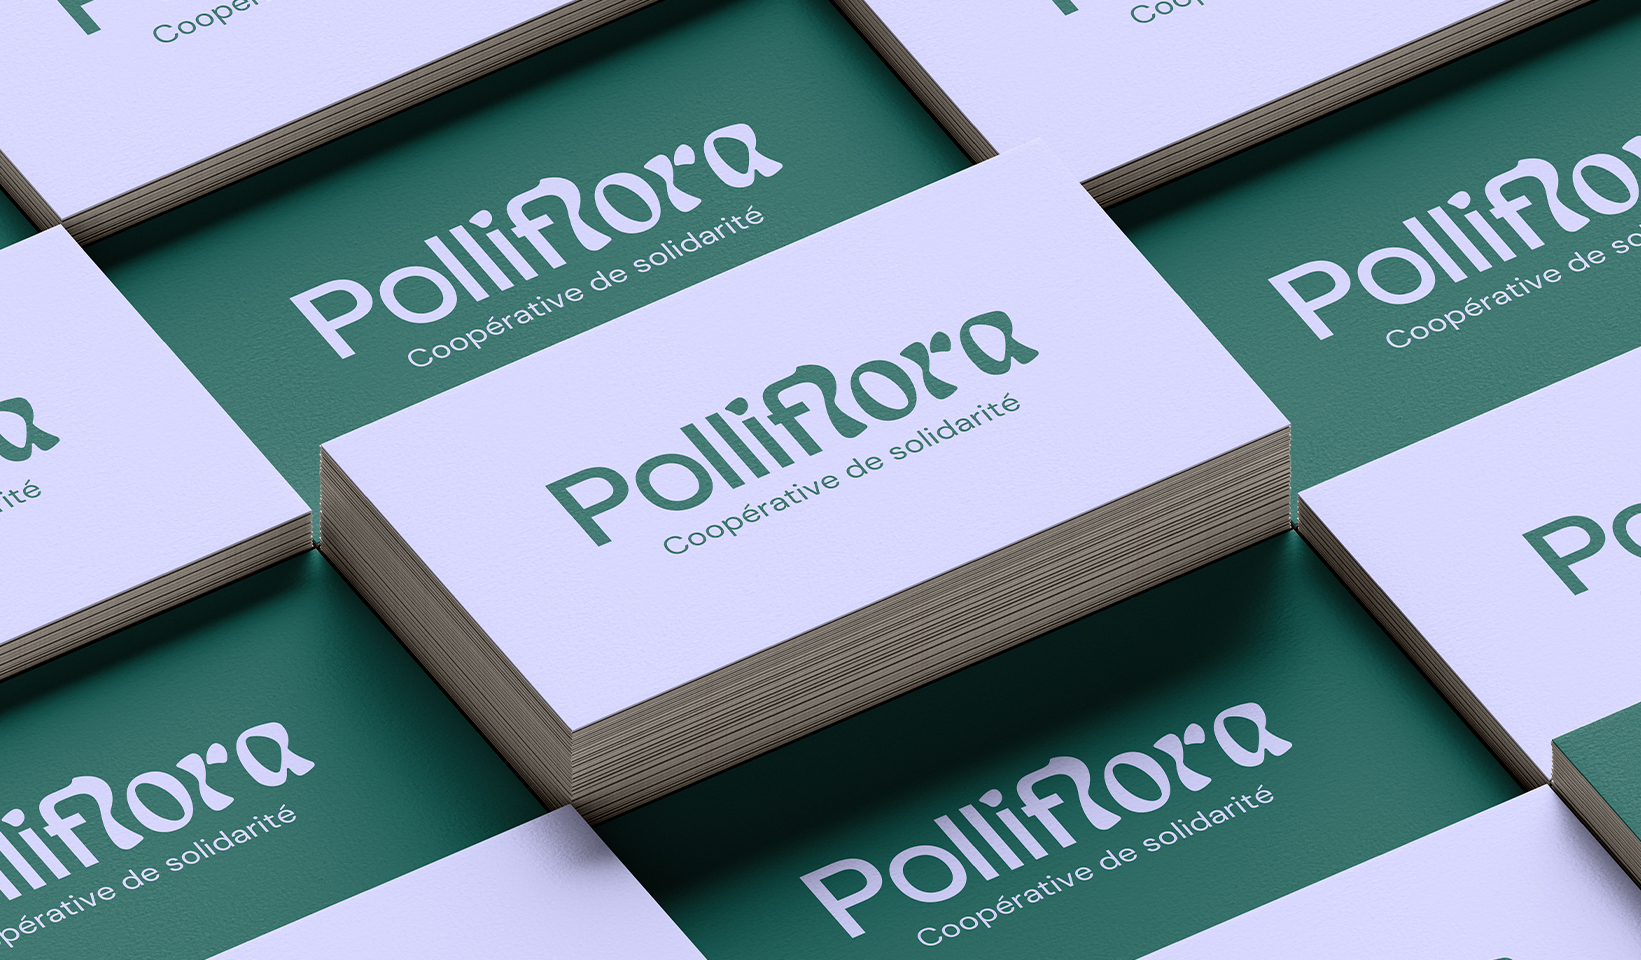 Polliflora Business Cards